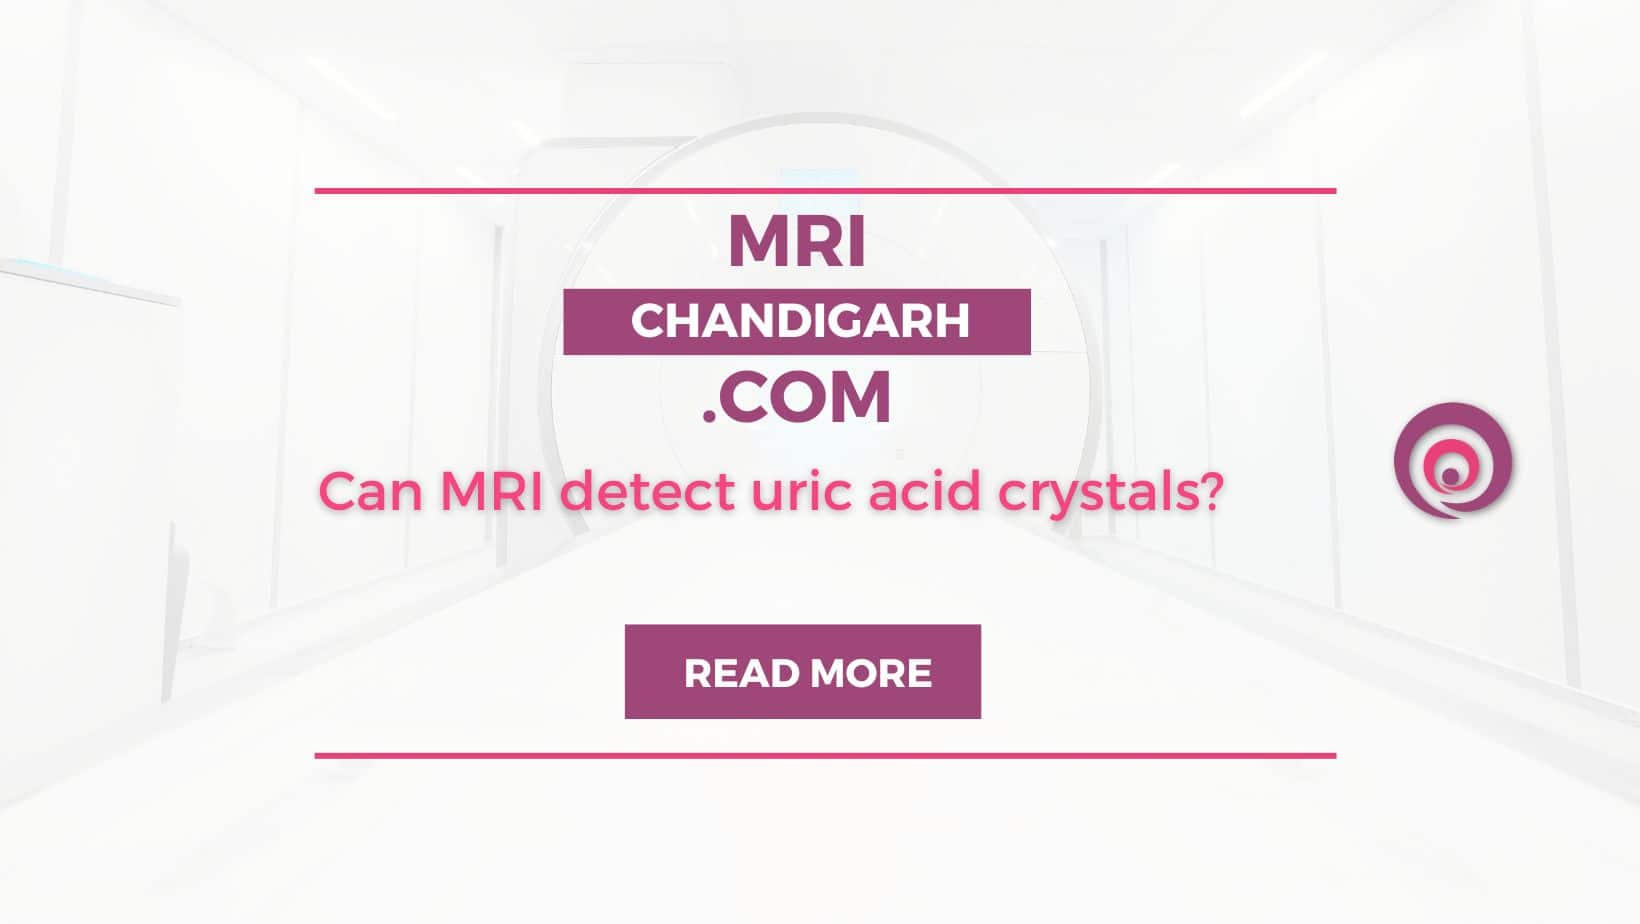 Can MRI detect uric acid crystals?